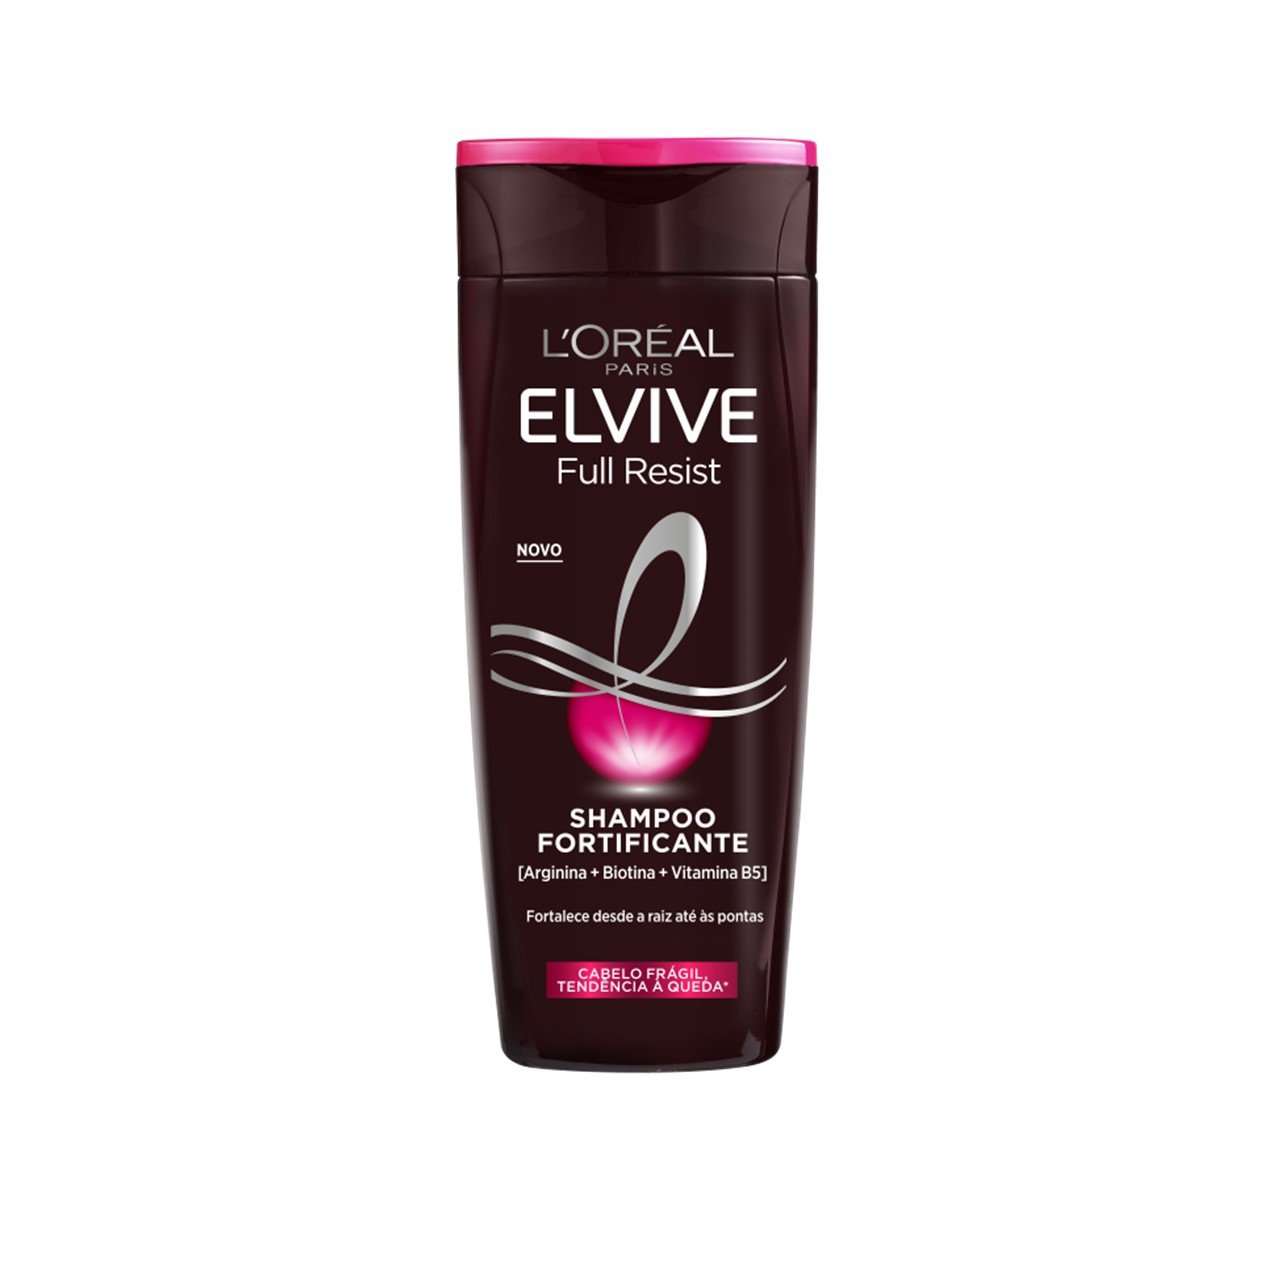 L'Oréal Paris Elvive Full Resist Shampoo 400ml (13.53fl oz)